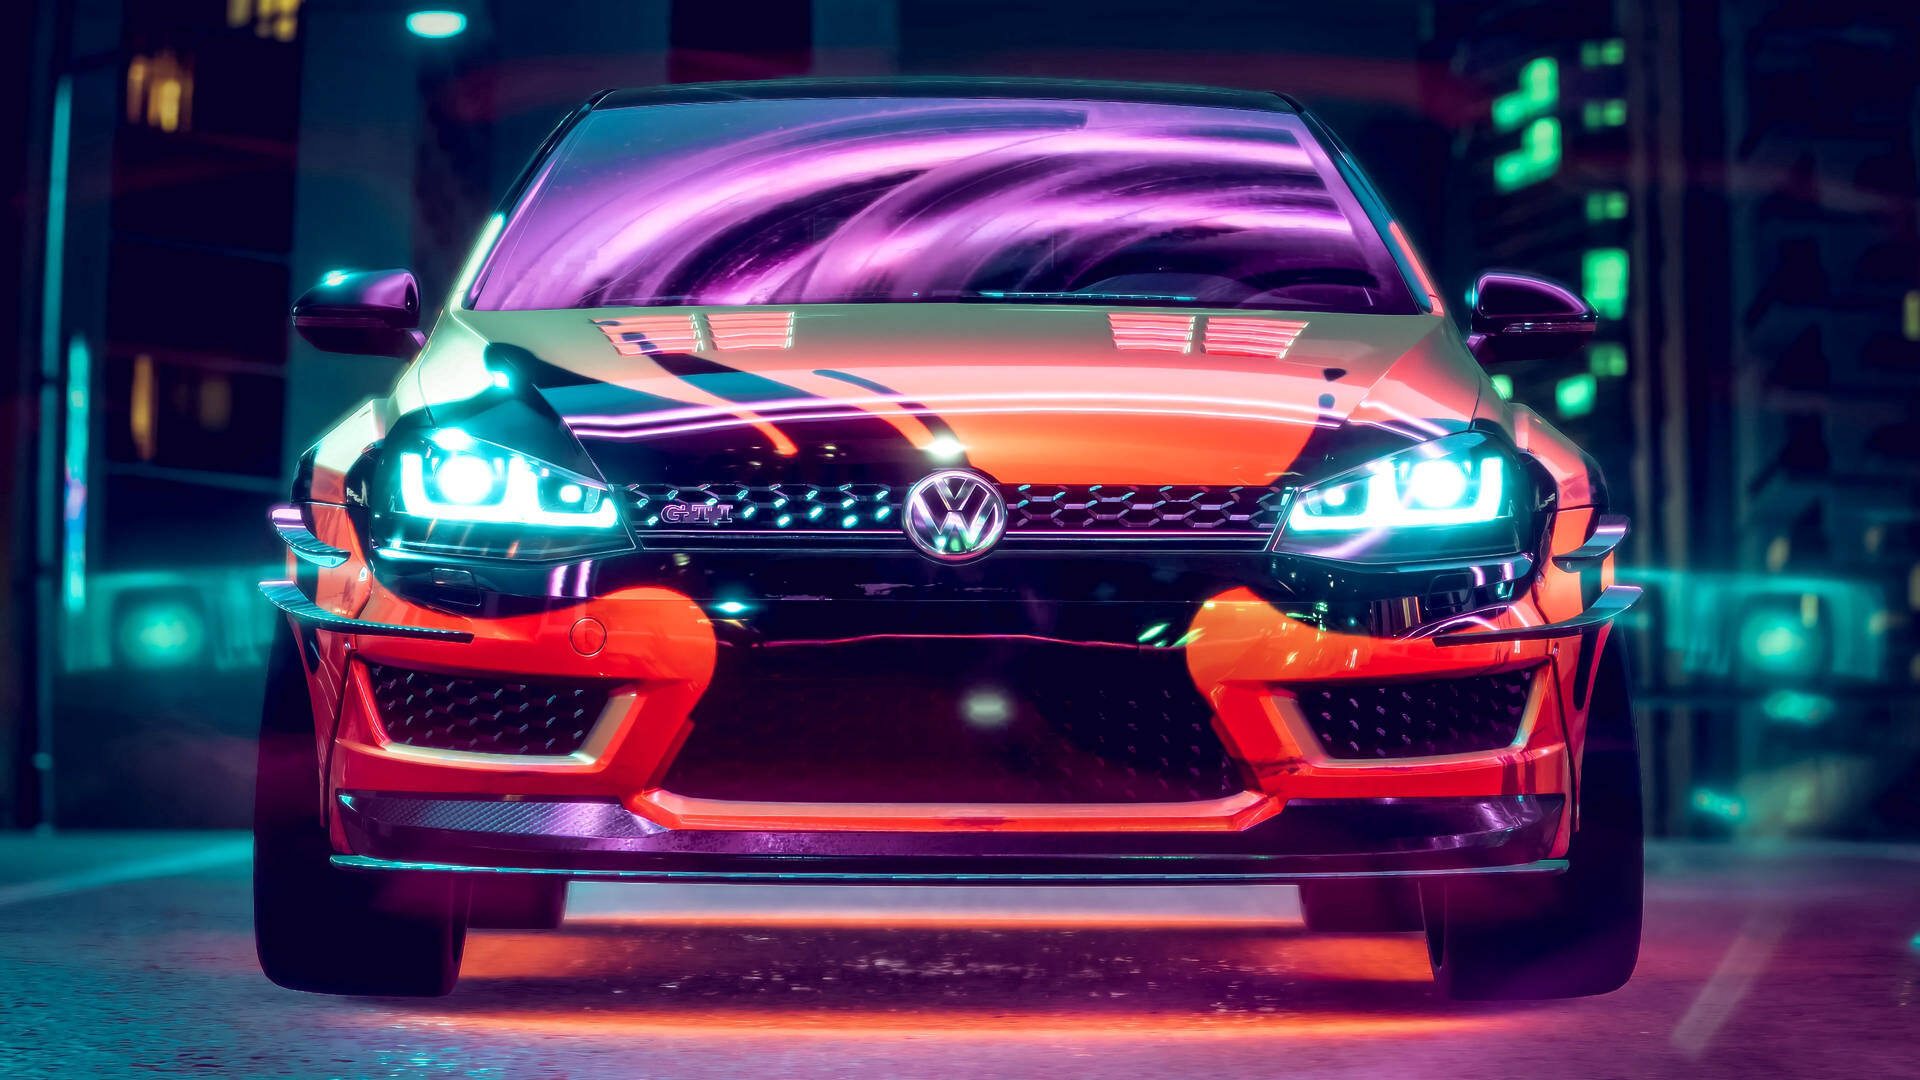 Top 999+ Neon Car Wallpaper Full HD, 4K✅Free to Use